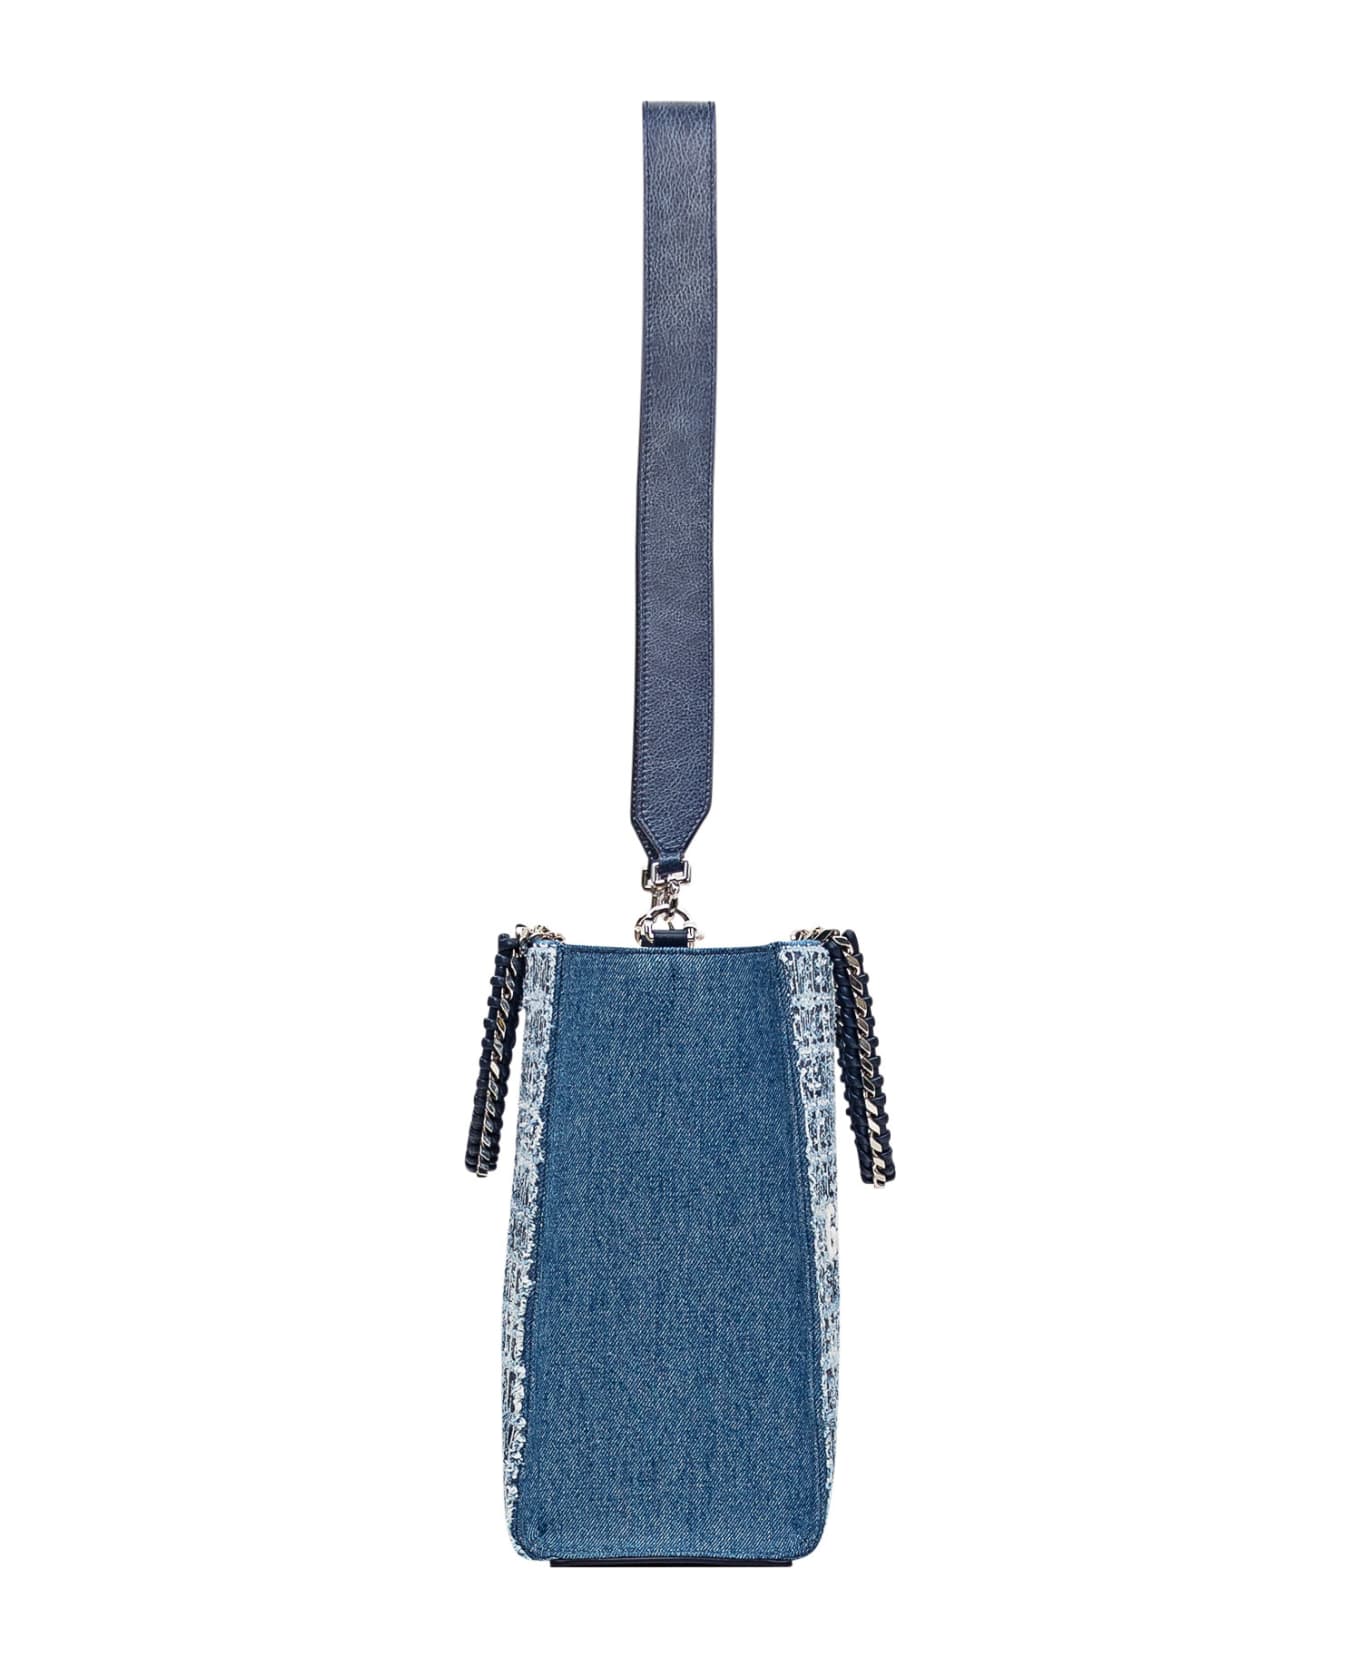 Givenchy Medium G-tote Bag - MEDIUM BLUE